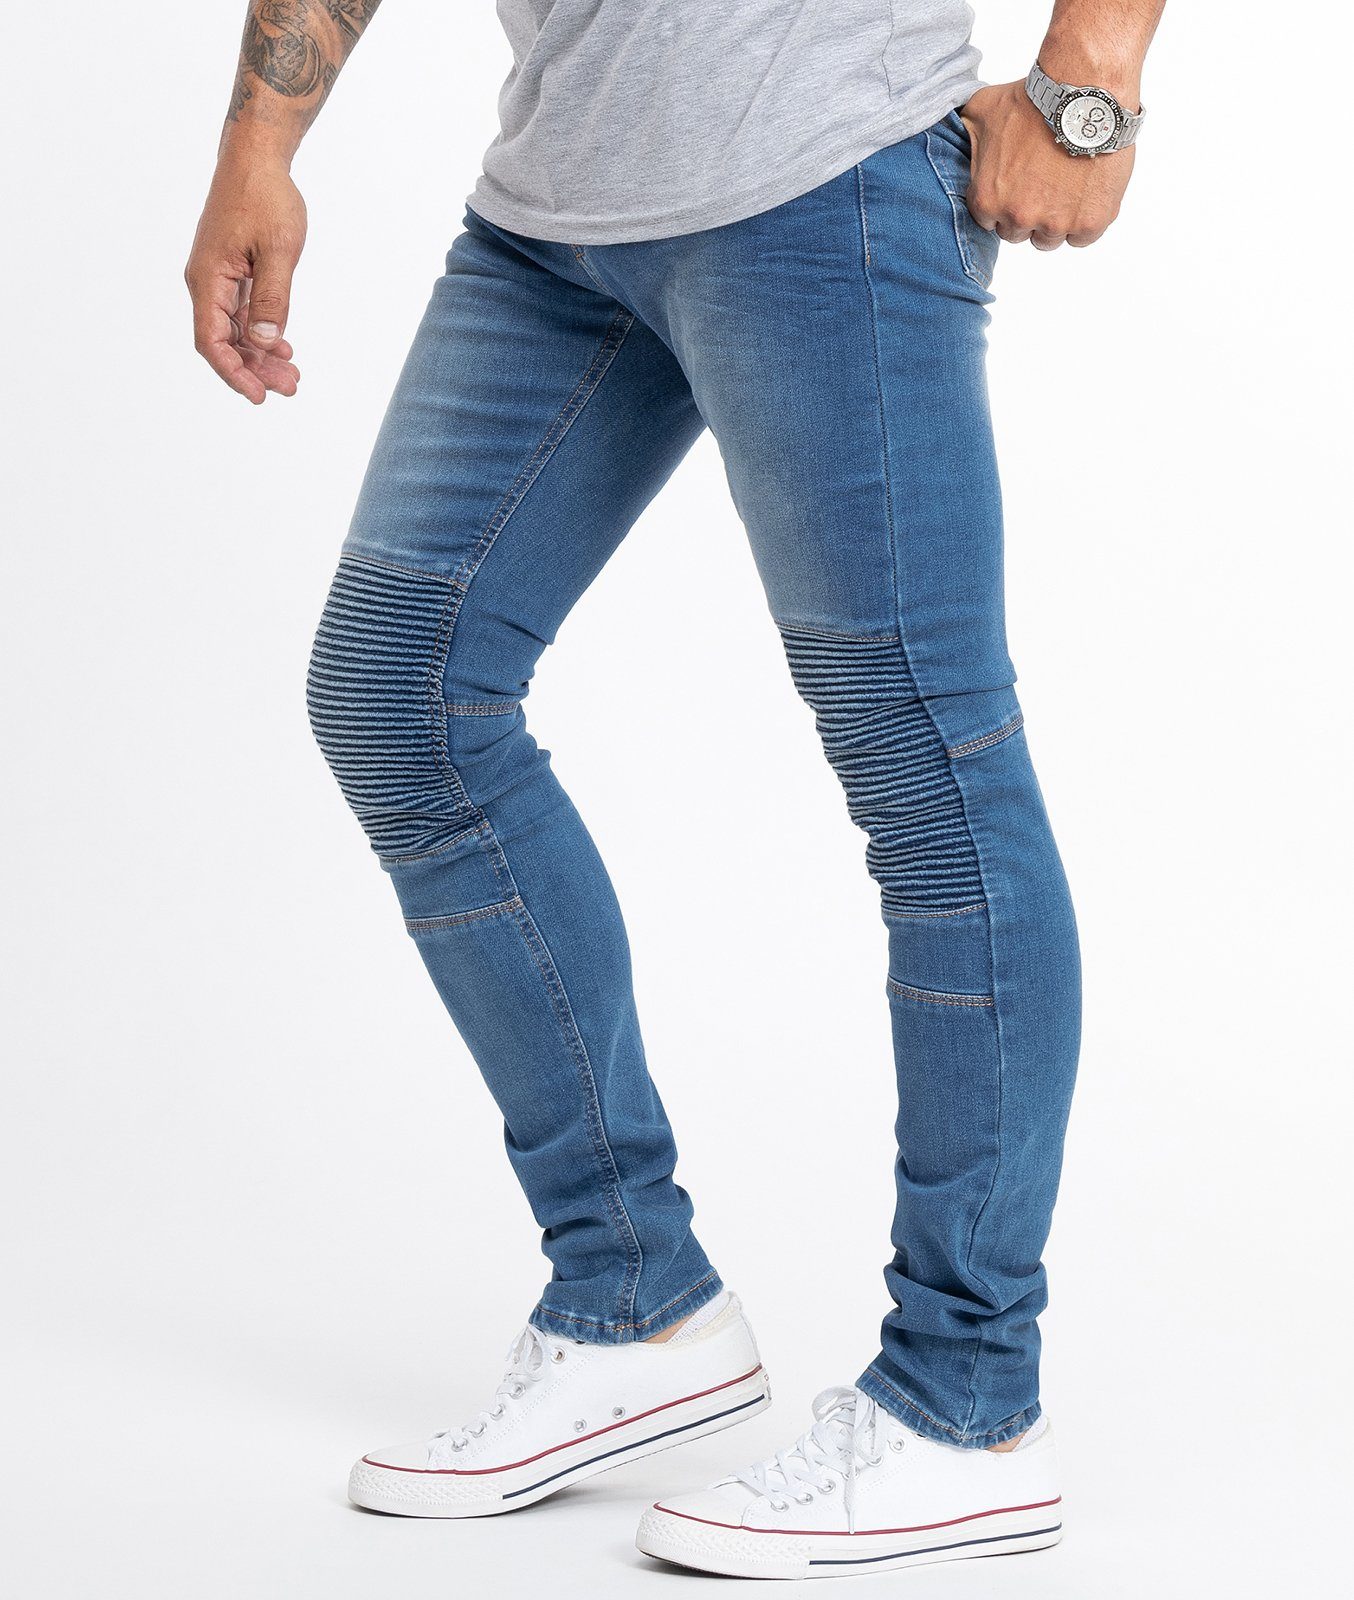 Herren Slim-fit-Jeans Blau Fit Rock Slim Biker-Style RC-2181 Jeans Creek